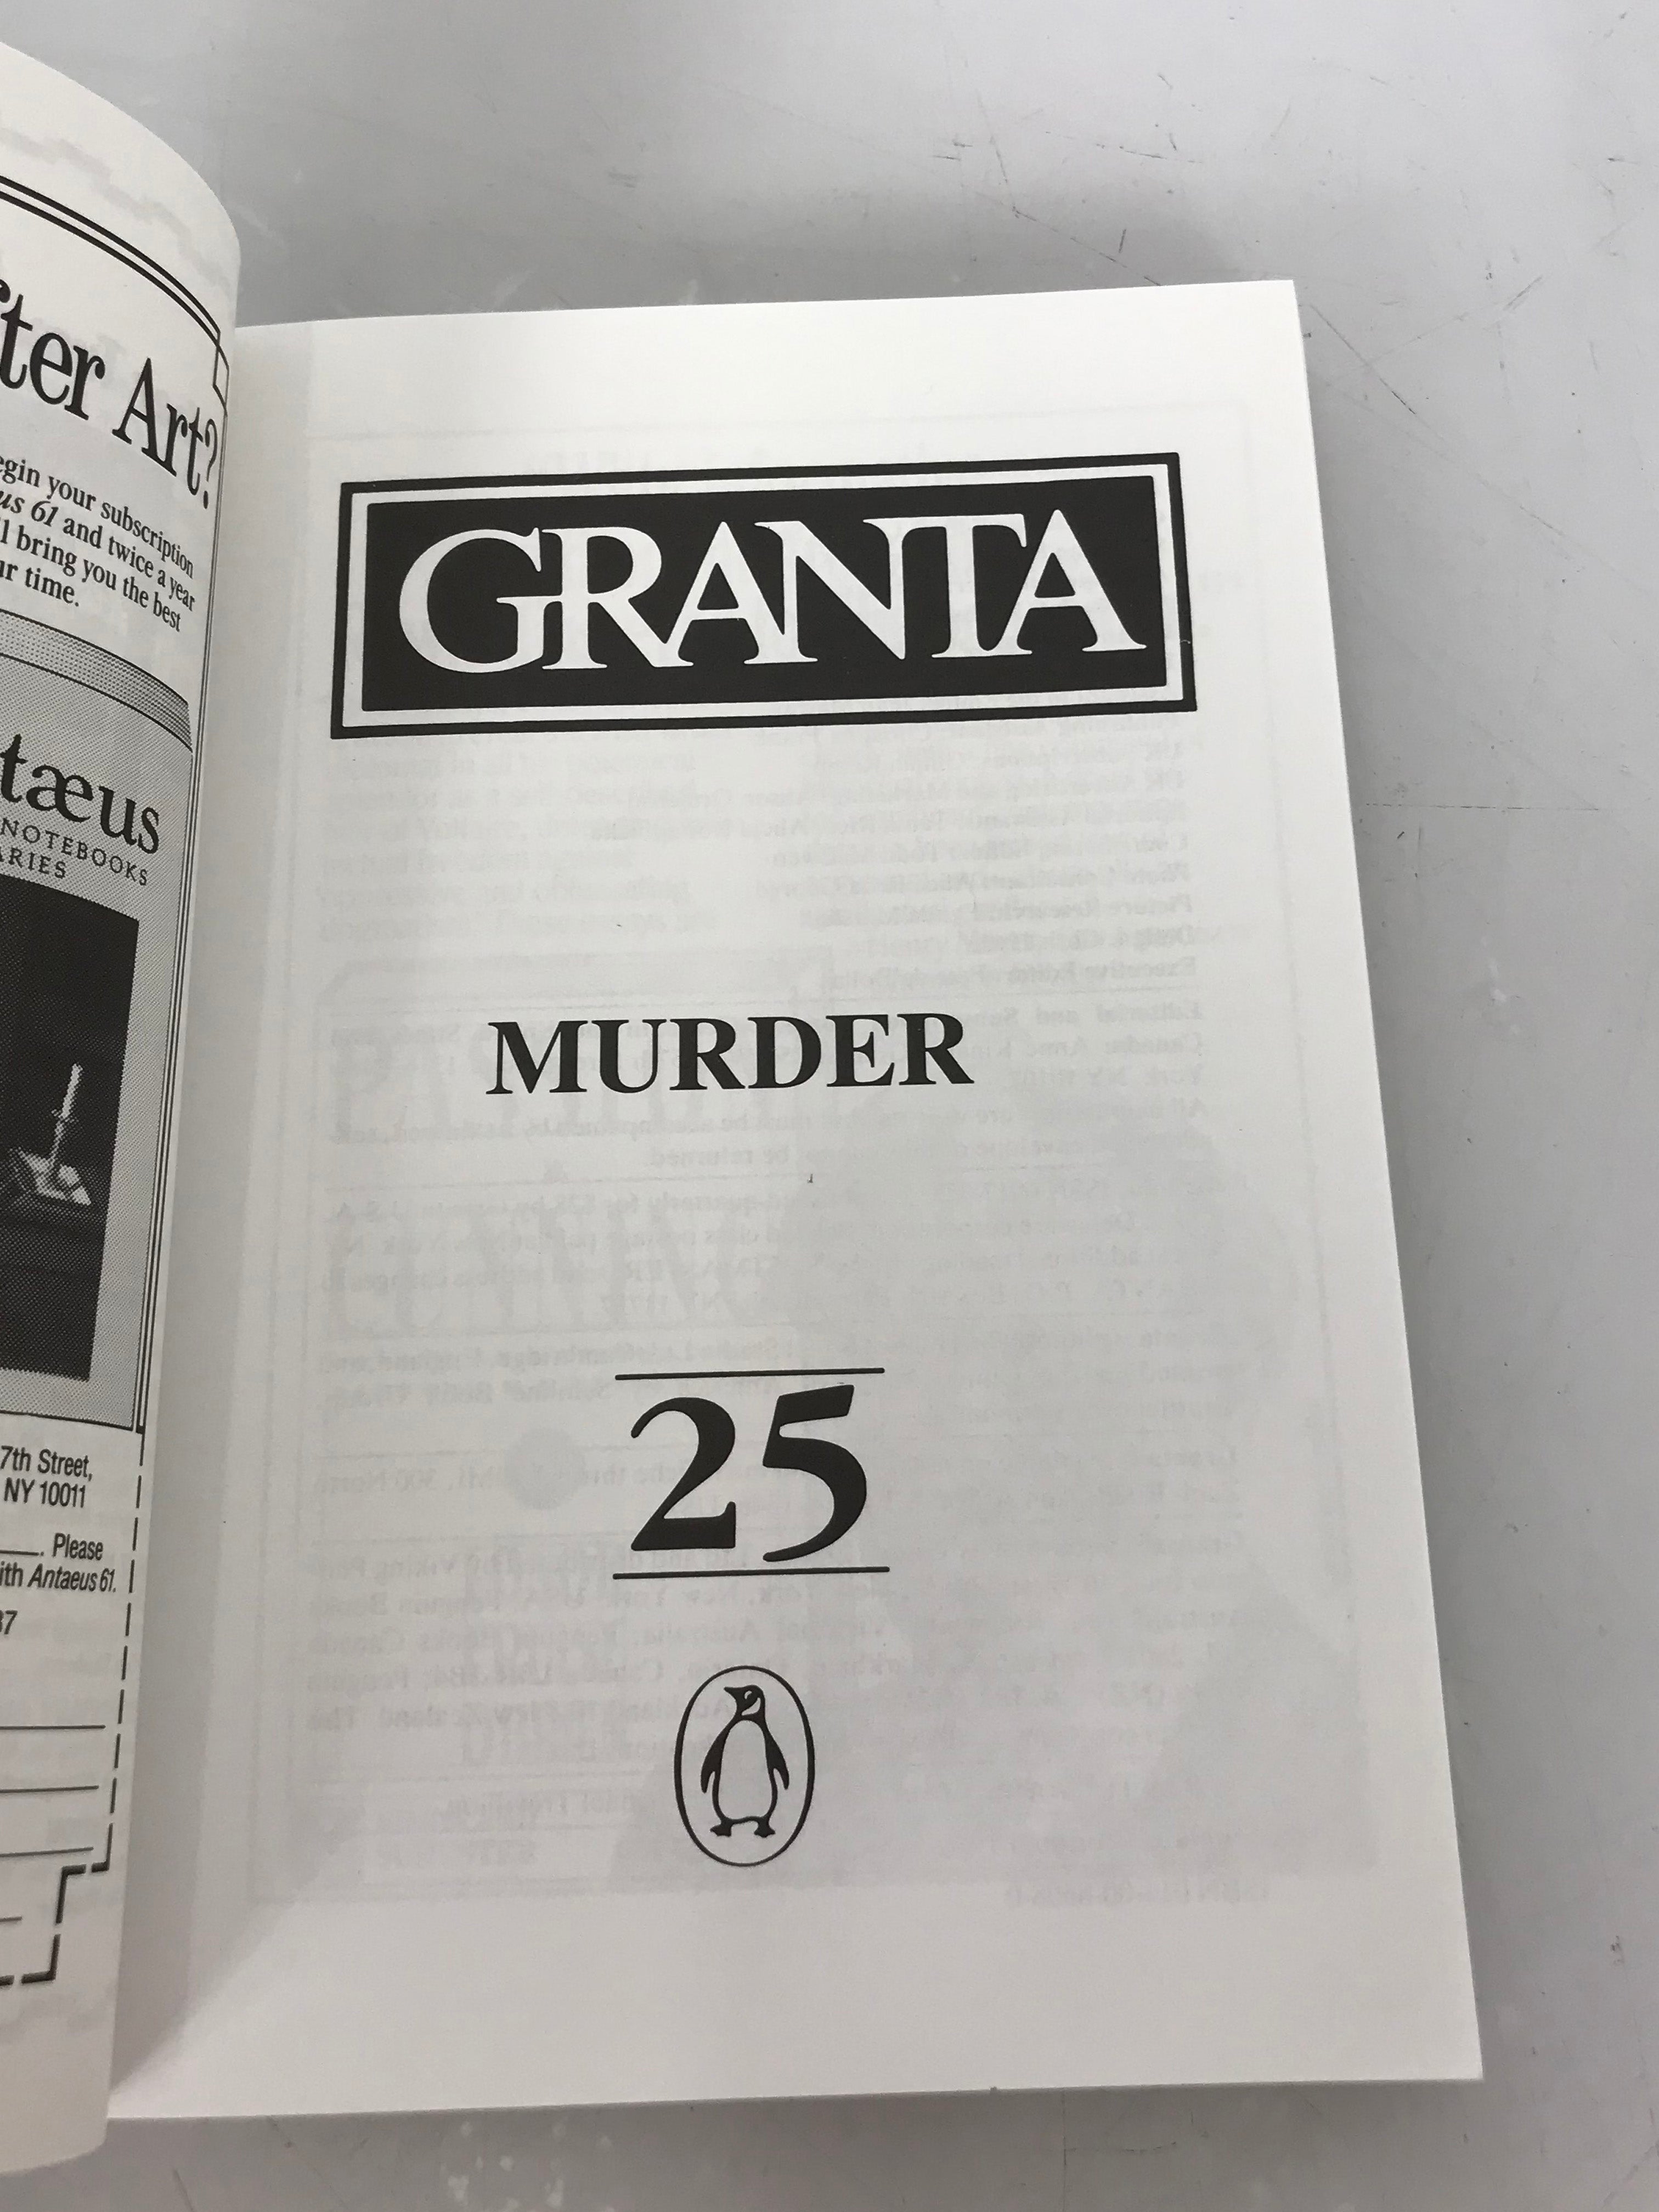 Lot of 6 Granta Magazine 23-27, 29 1988-1989